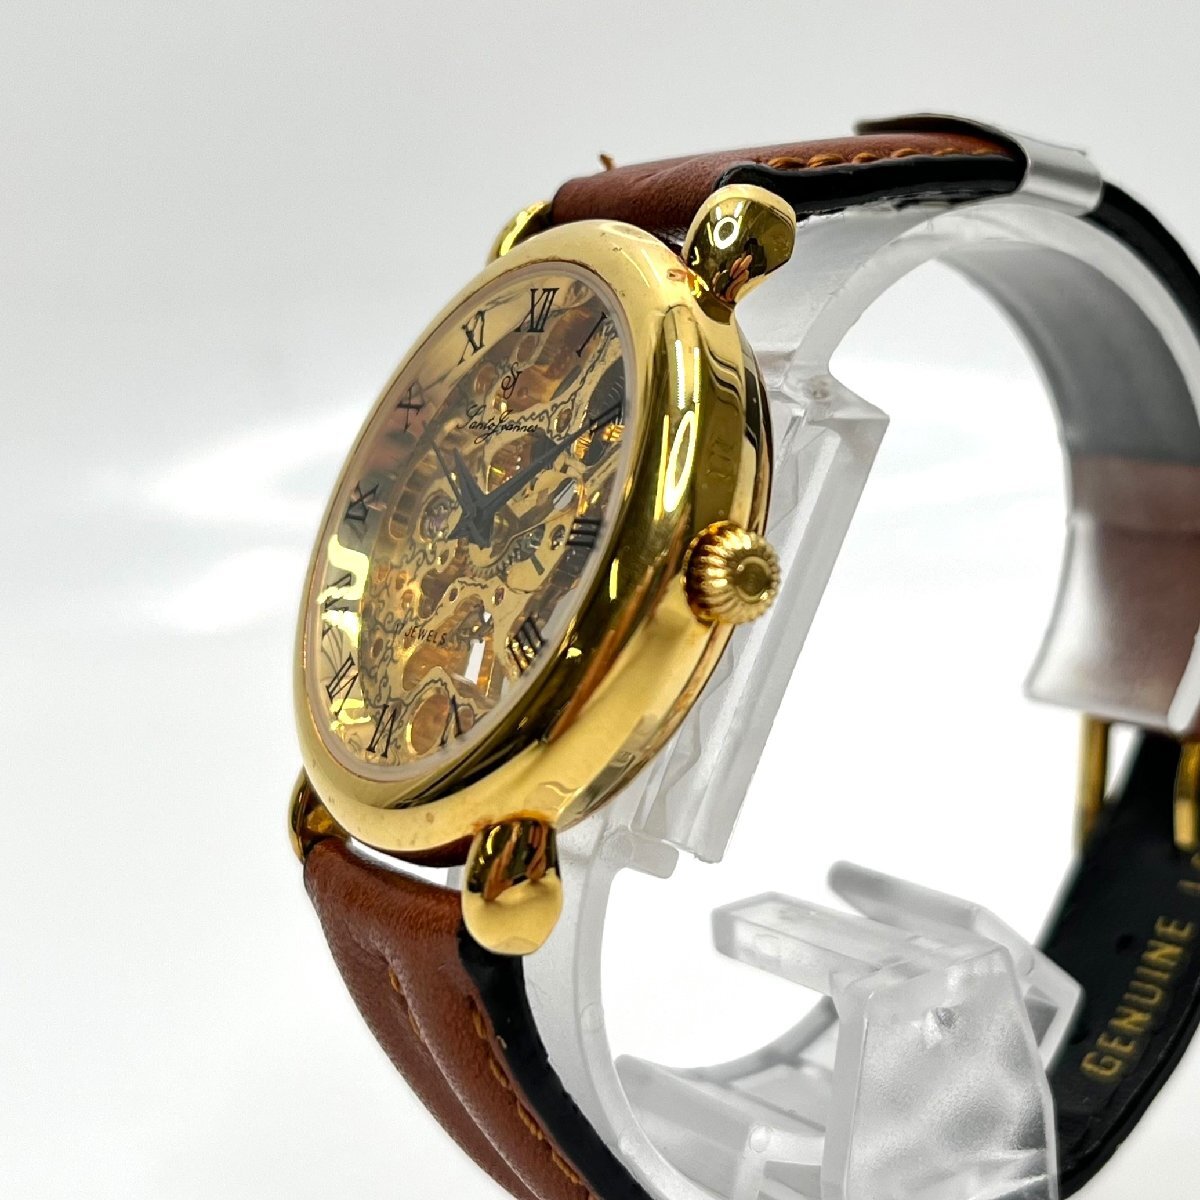 [9304-004] Santo Joannes 腕時計 スケルトン 18KGP 3244 手巻き セントジョイナス 稼働品 ケース付き 革ベルト ゴールド_画像3